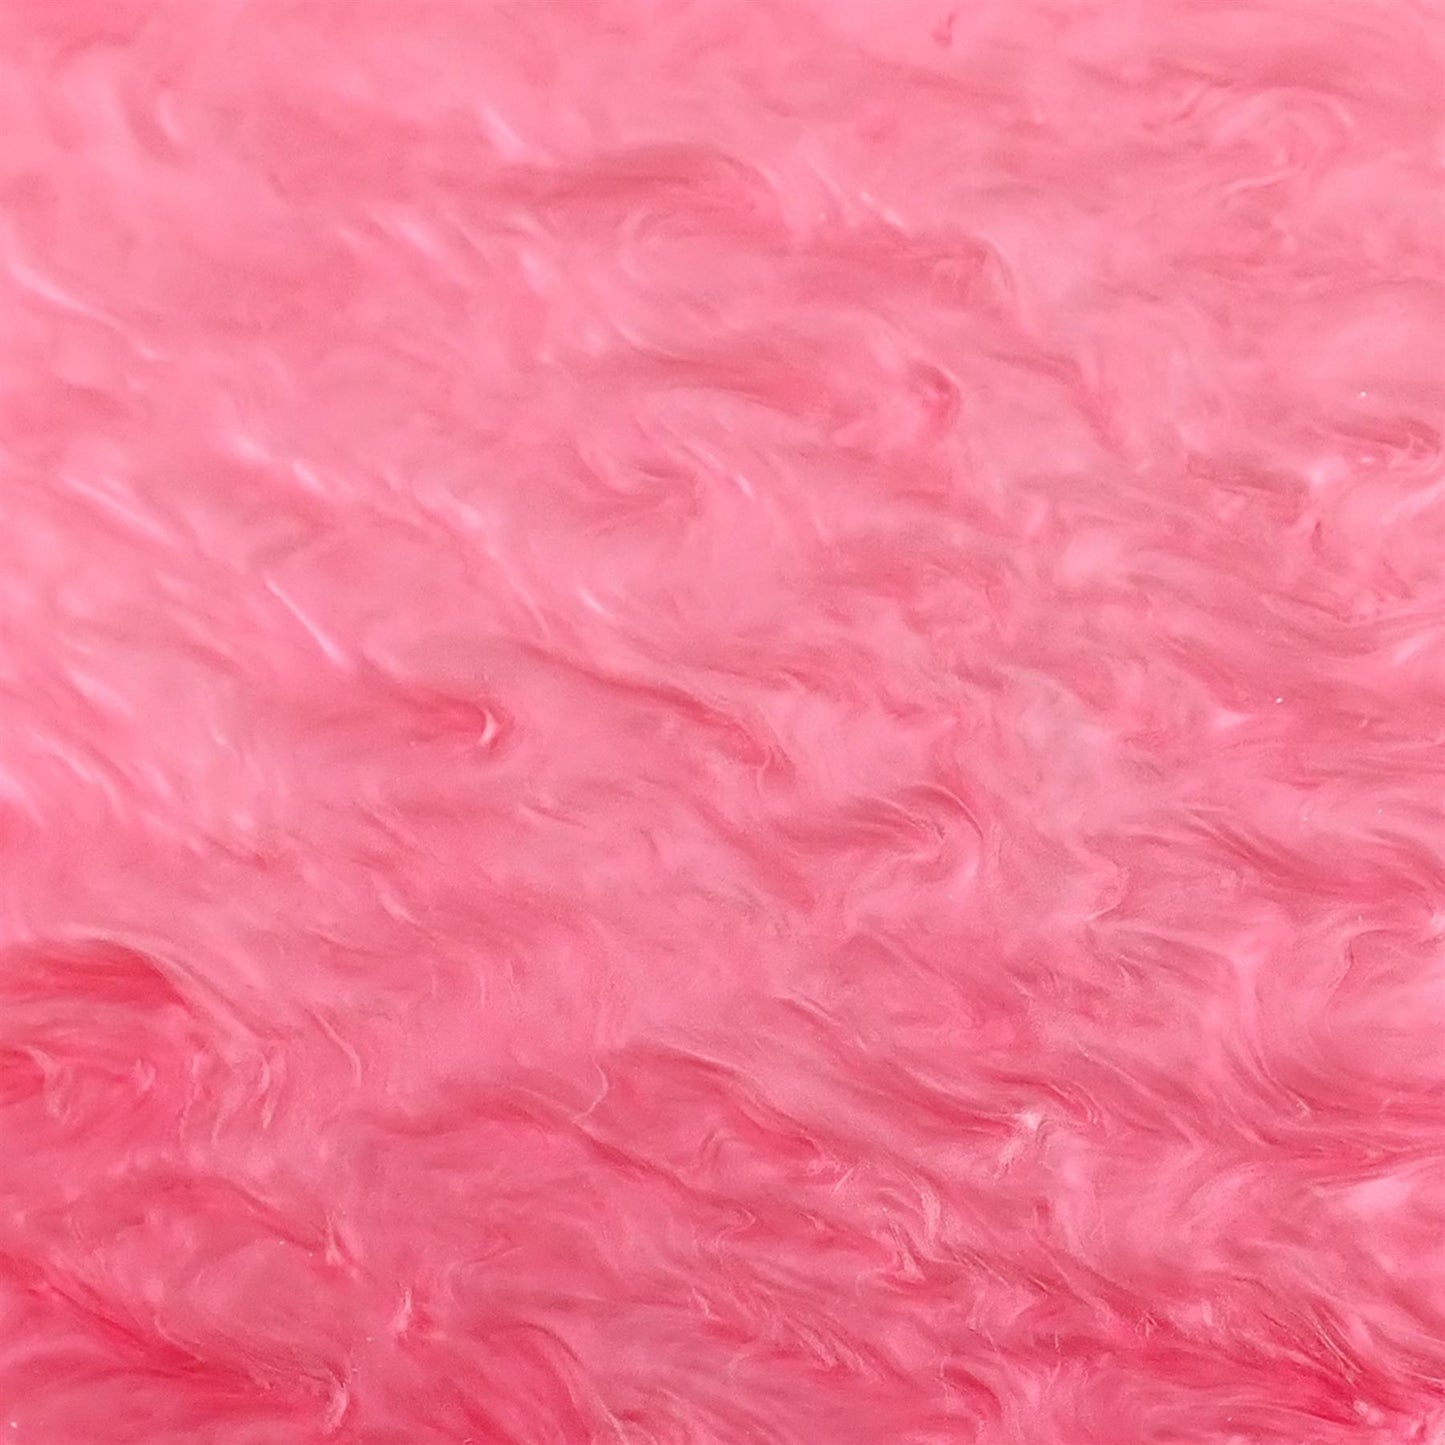 Incudo Pink Pearl Acrylic Sheet - 400x300x3mm (15.7x11.81x0.12")